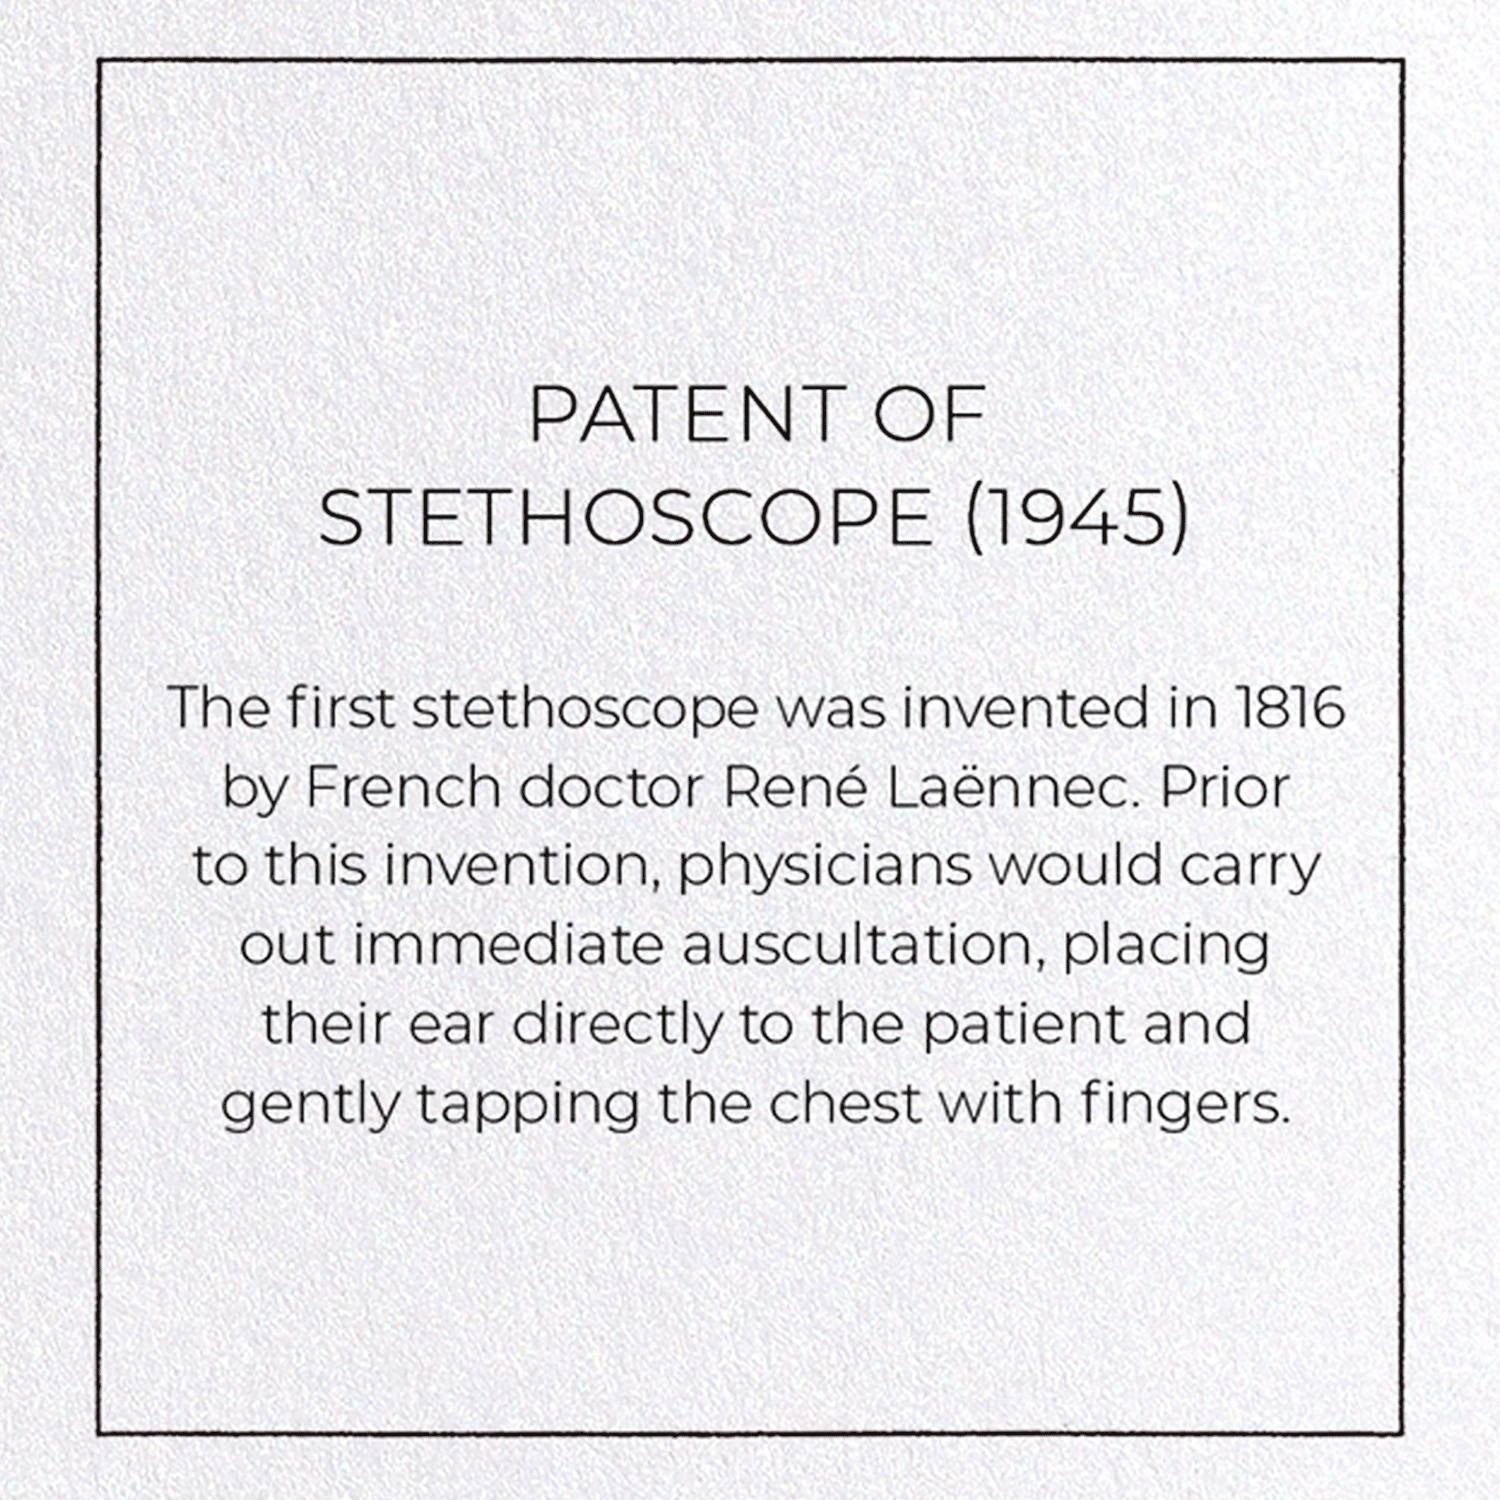 PATENT OF STETHOSCOPE (1945)